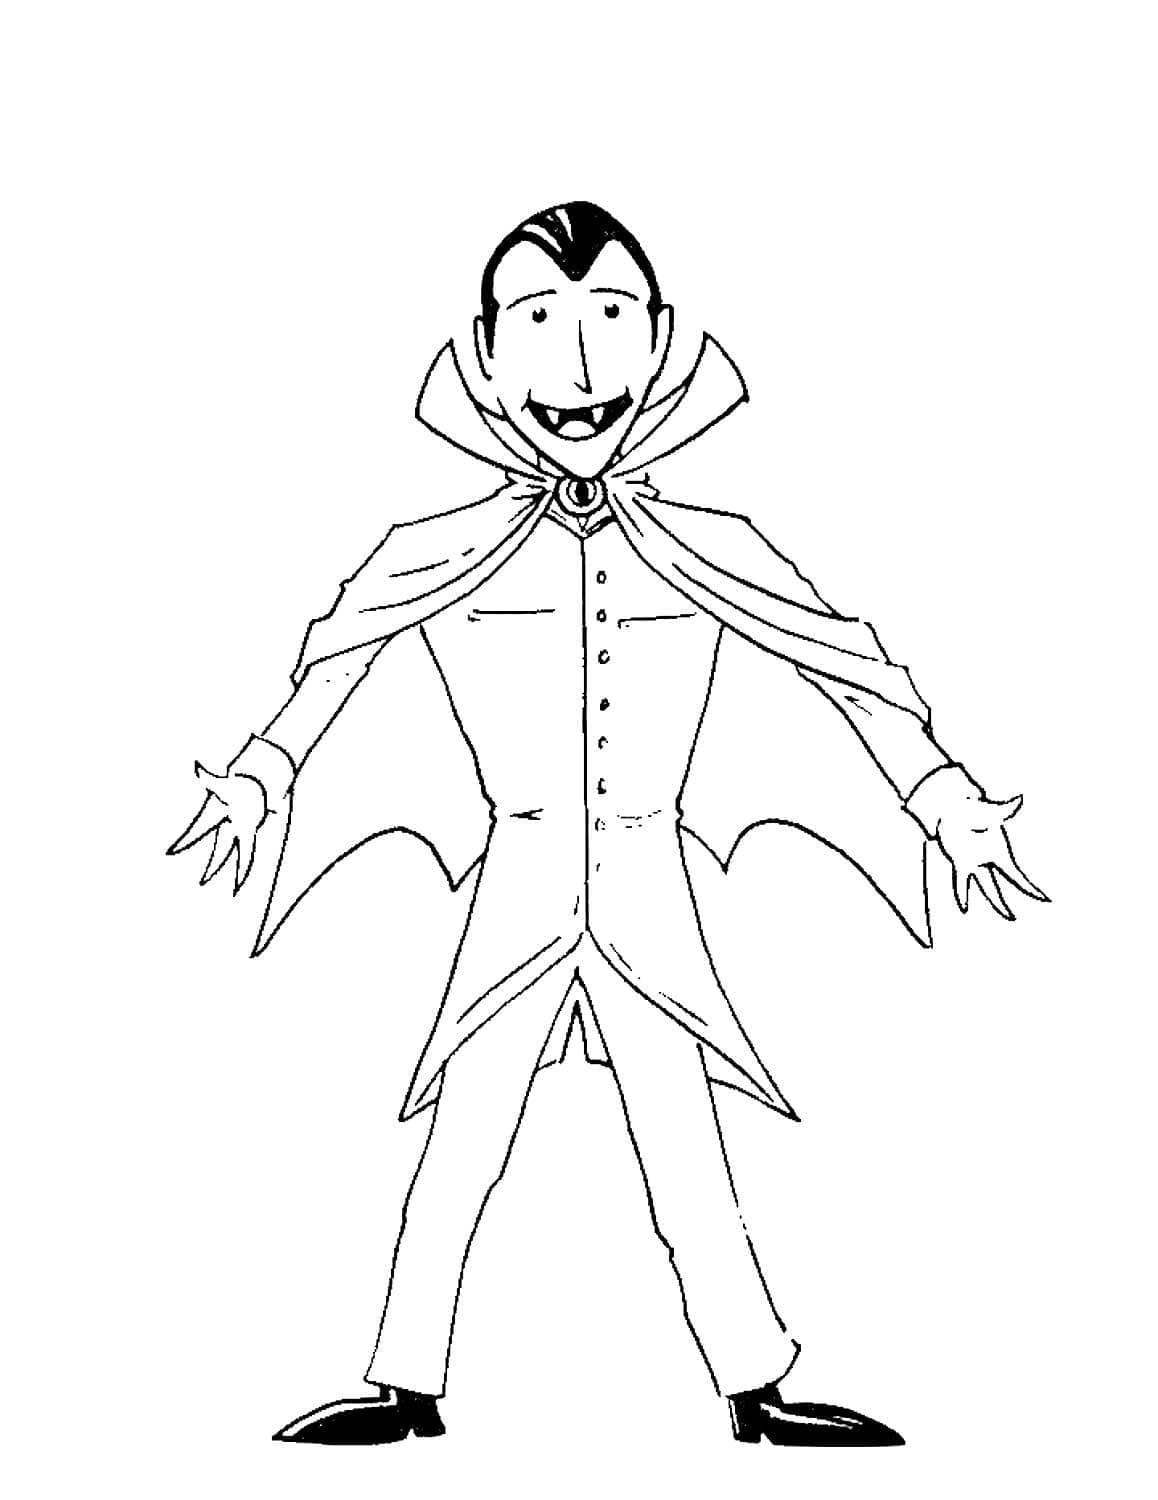 Dracula Heureux coloring page